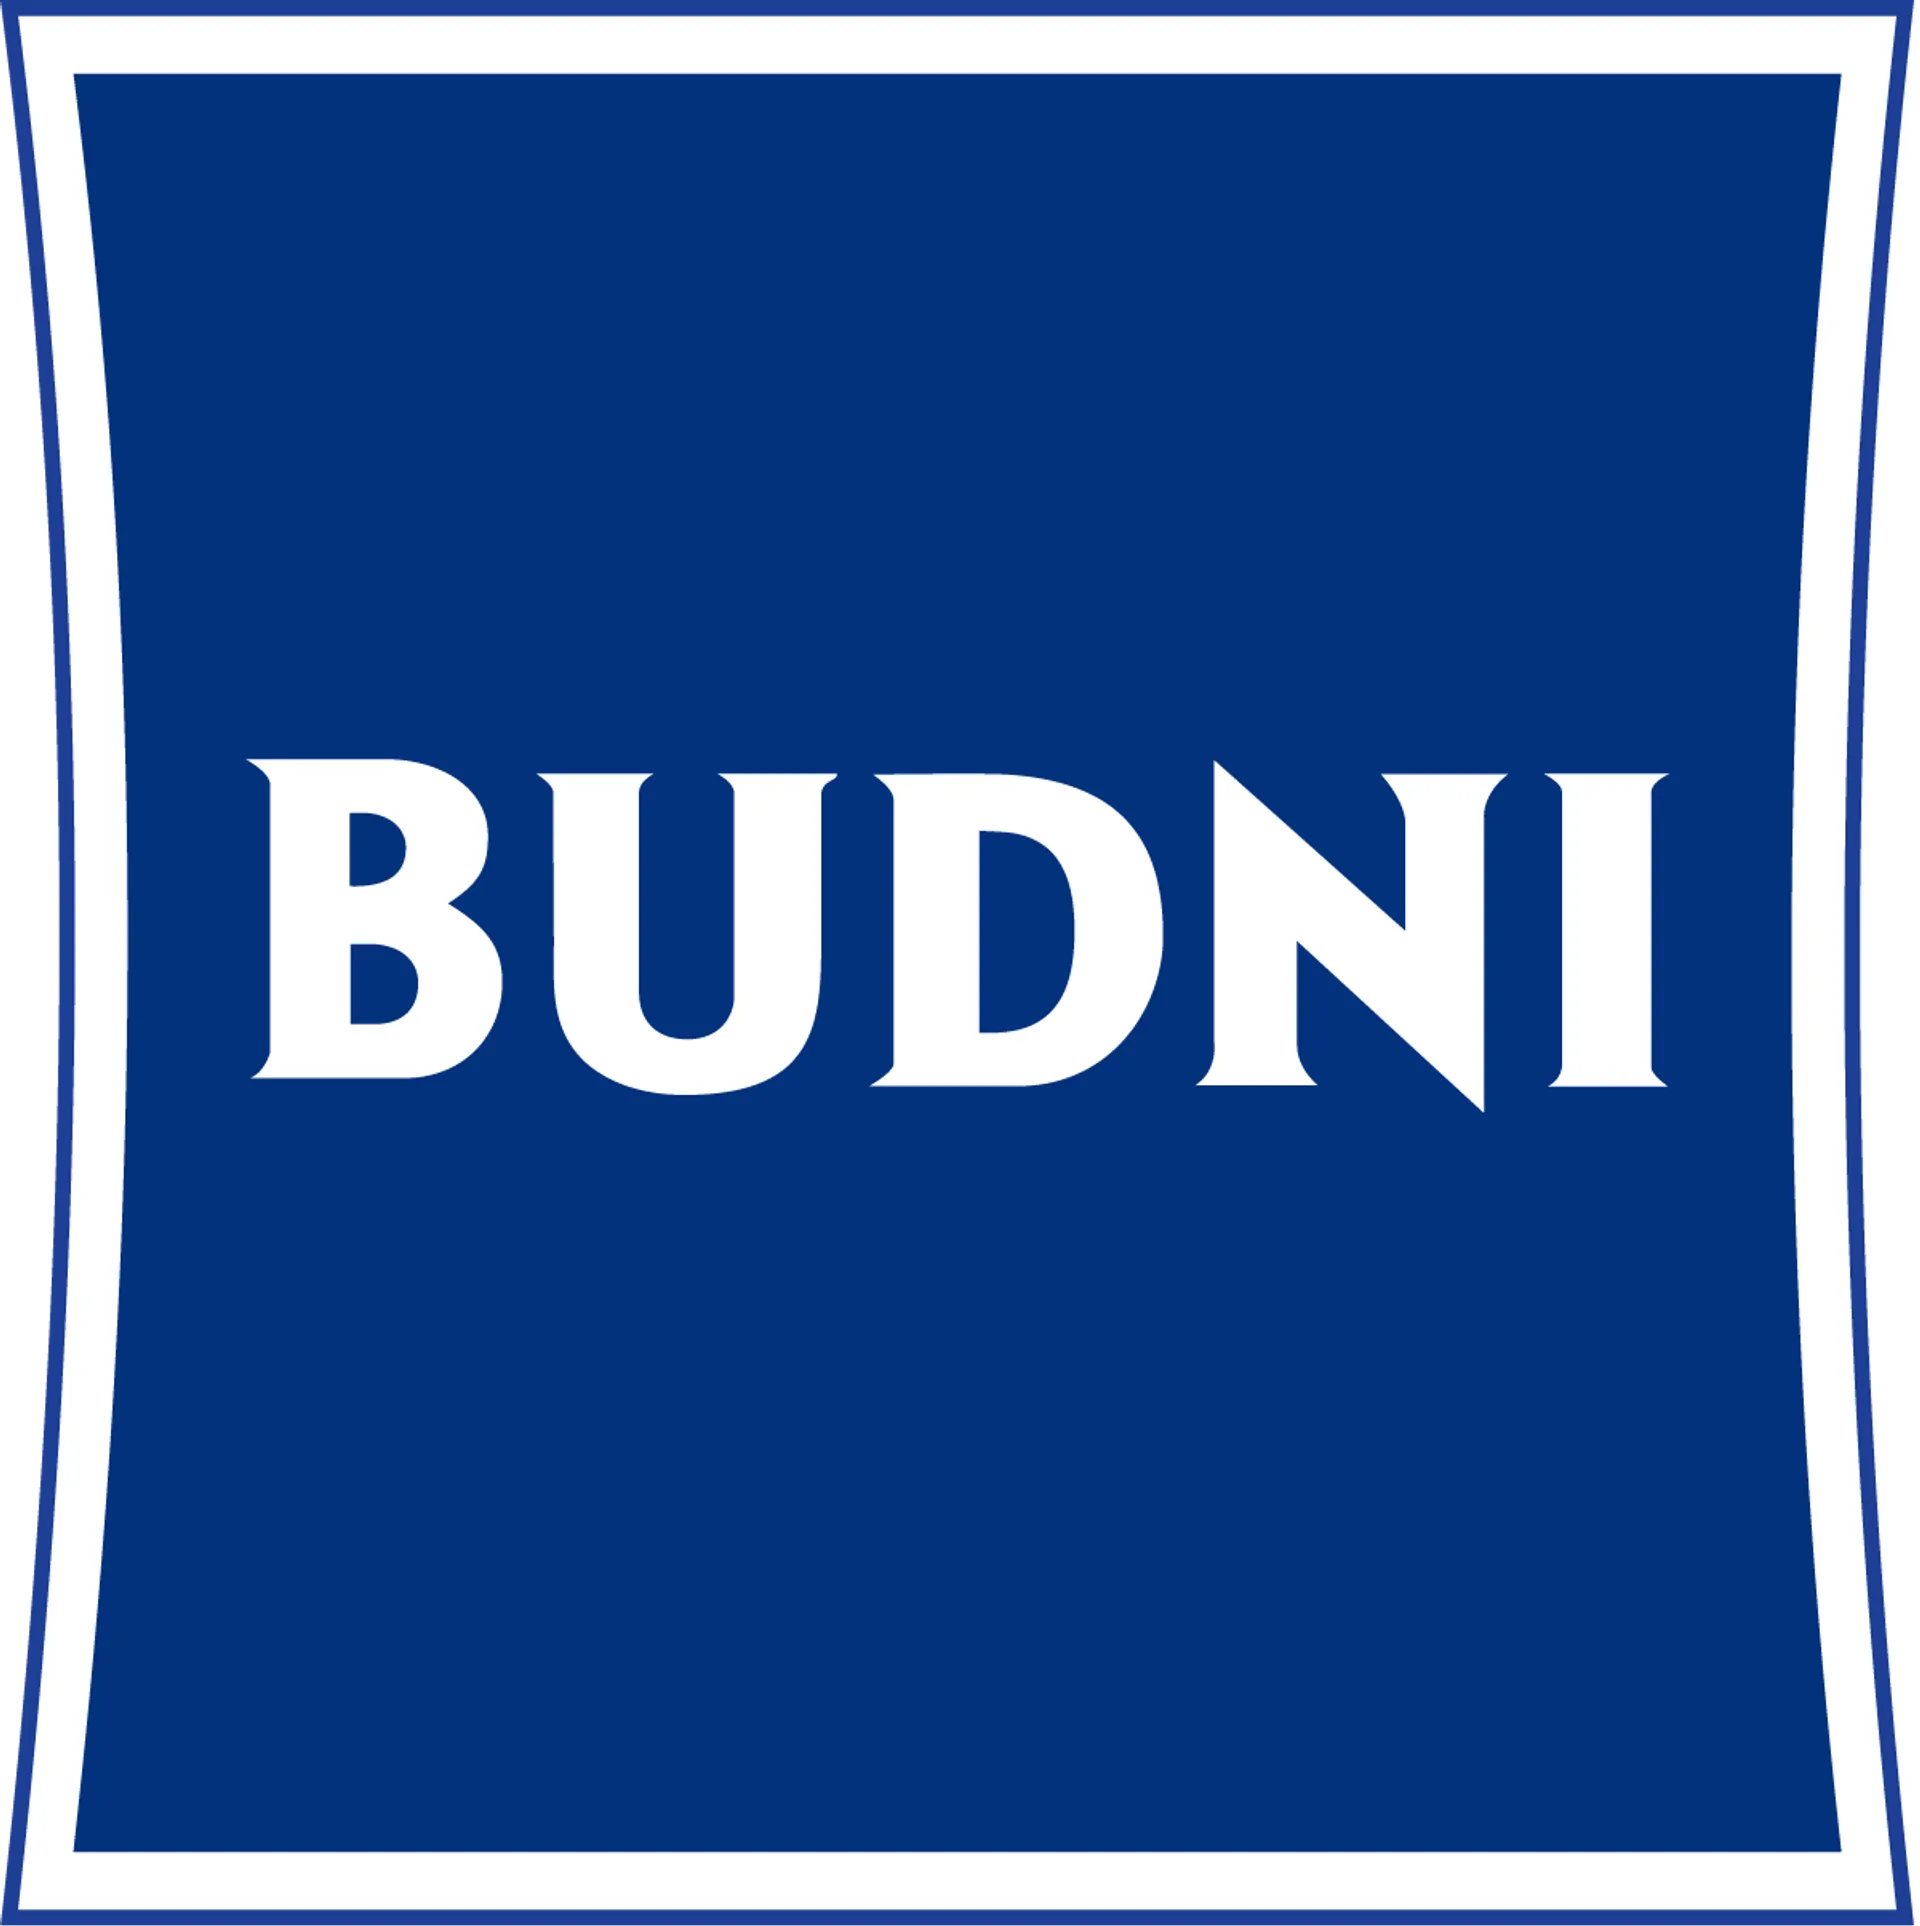 BUDNI logo